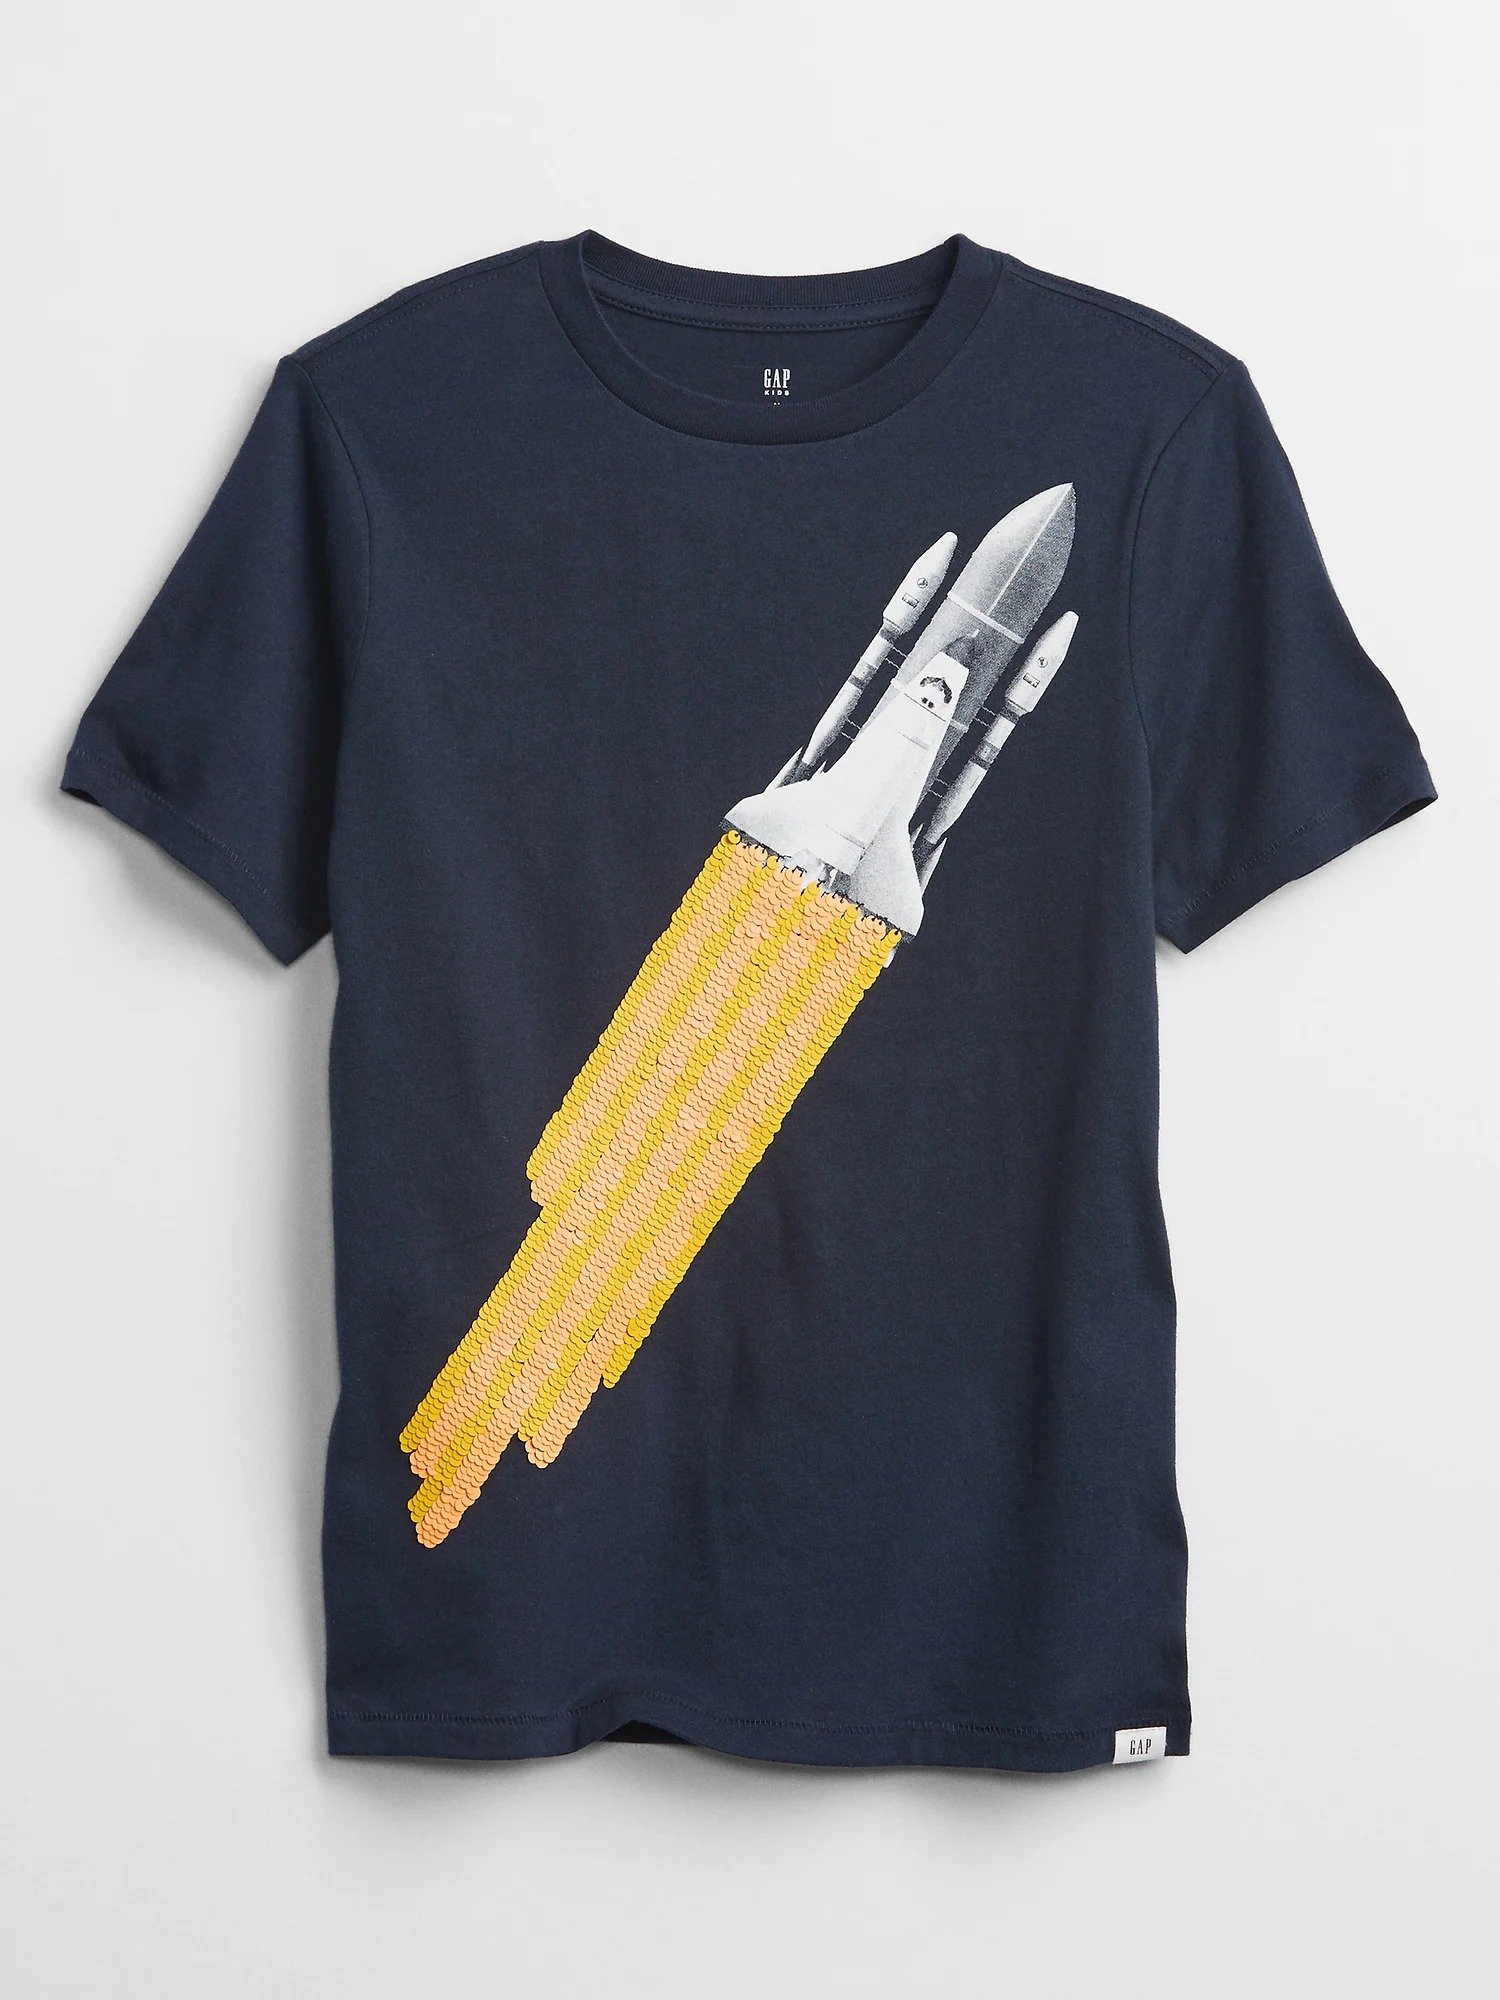 Grafik Desenli T-Shirt product image